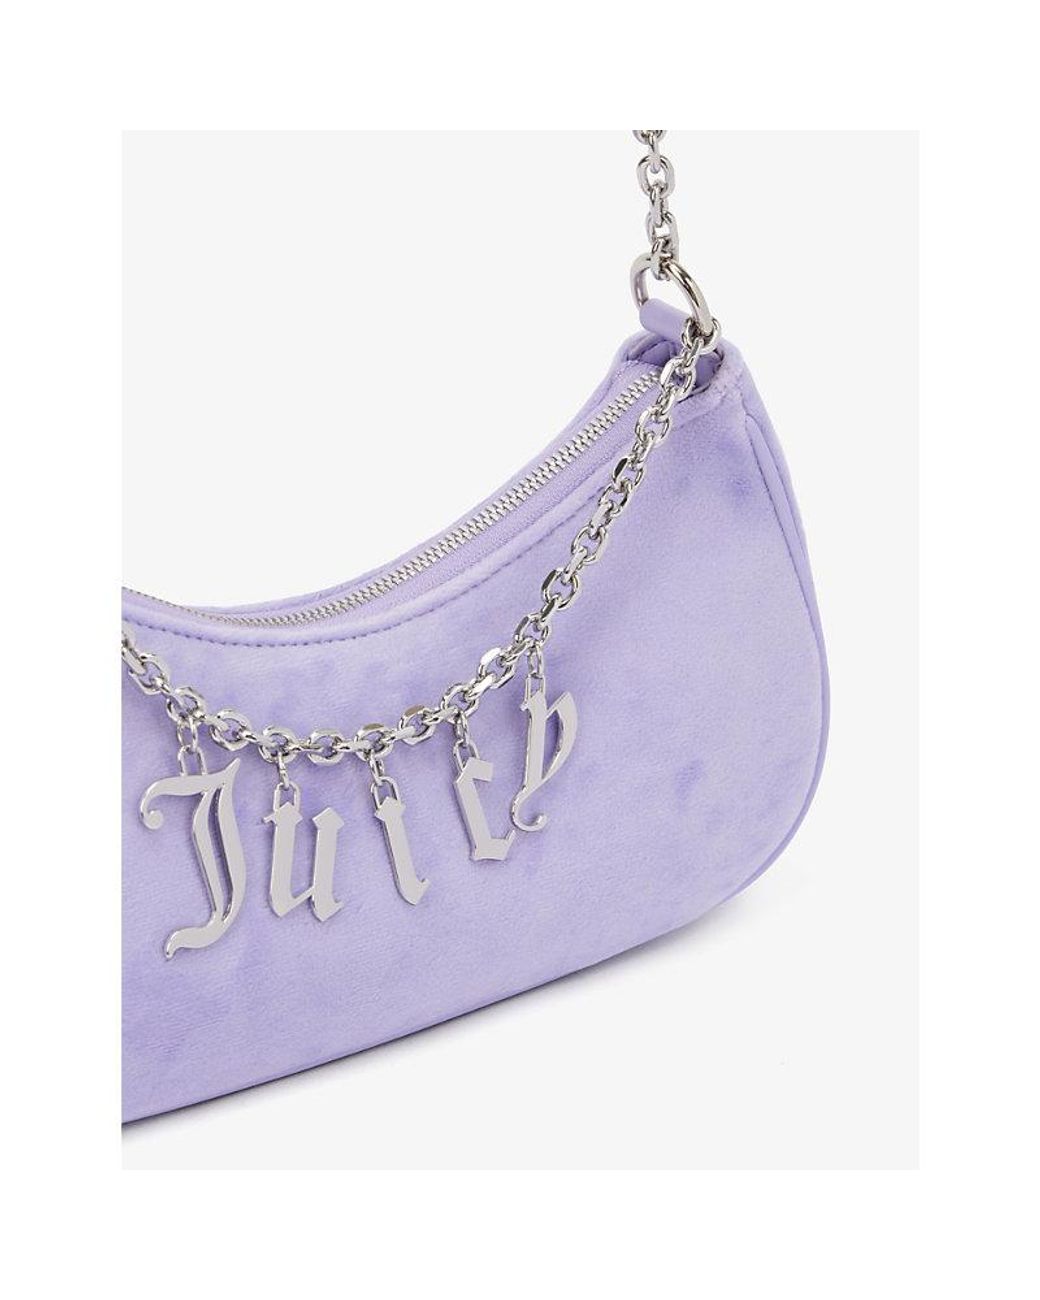 Juicy Couture Purple Velour Velvet Travel Cosmetics Makeup Bag with Zipper  💜 | eBay